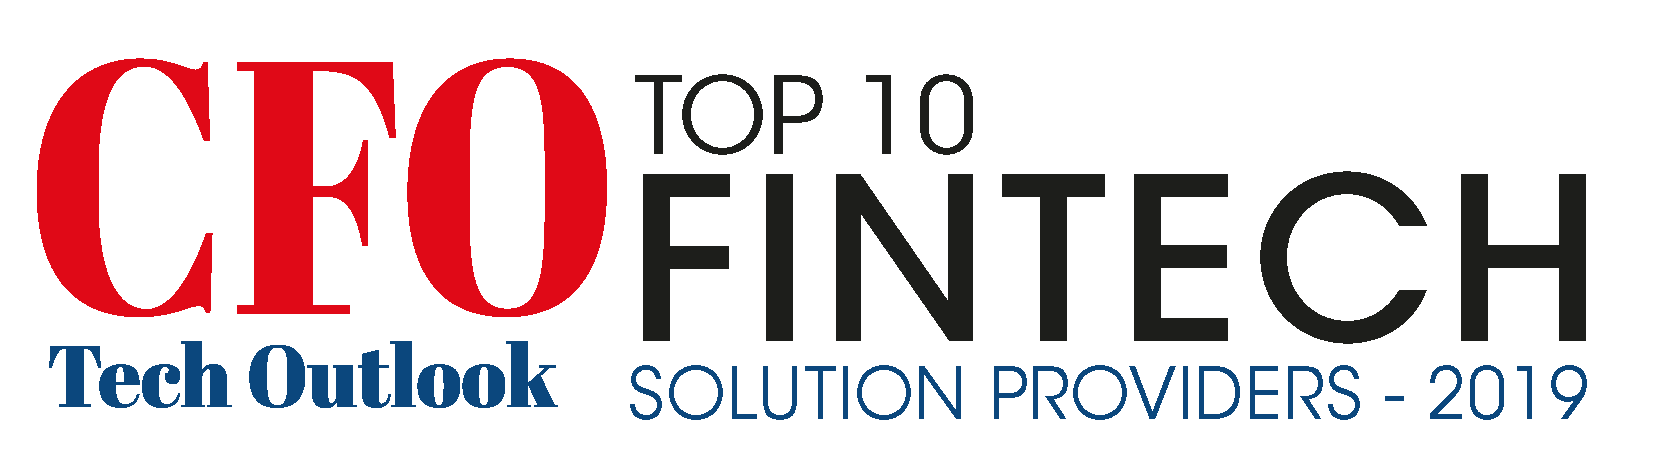 Supernova Technology Named a 2019 Top 10 FinTech Solution Provider